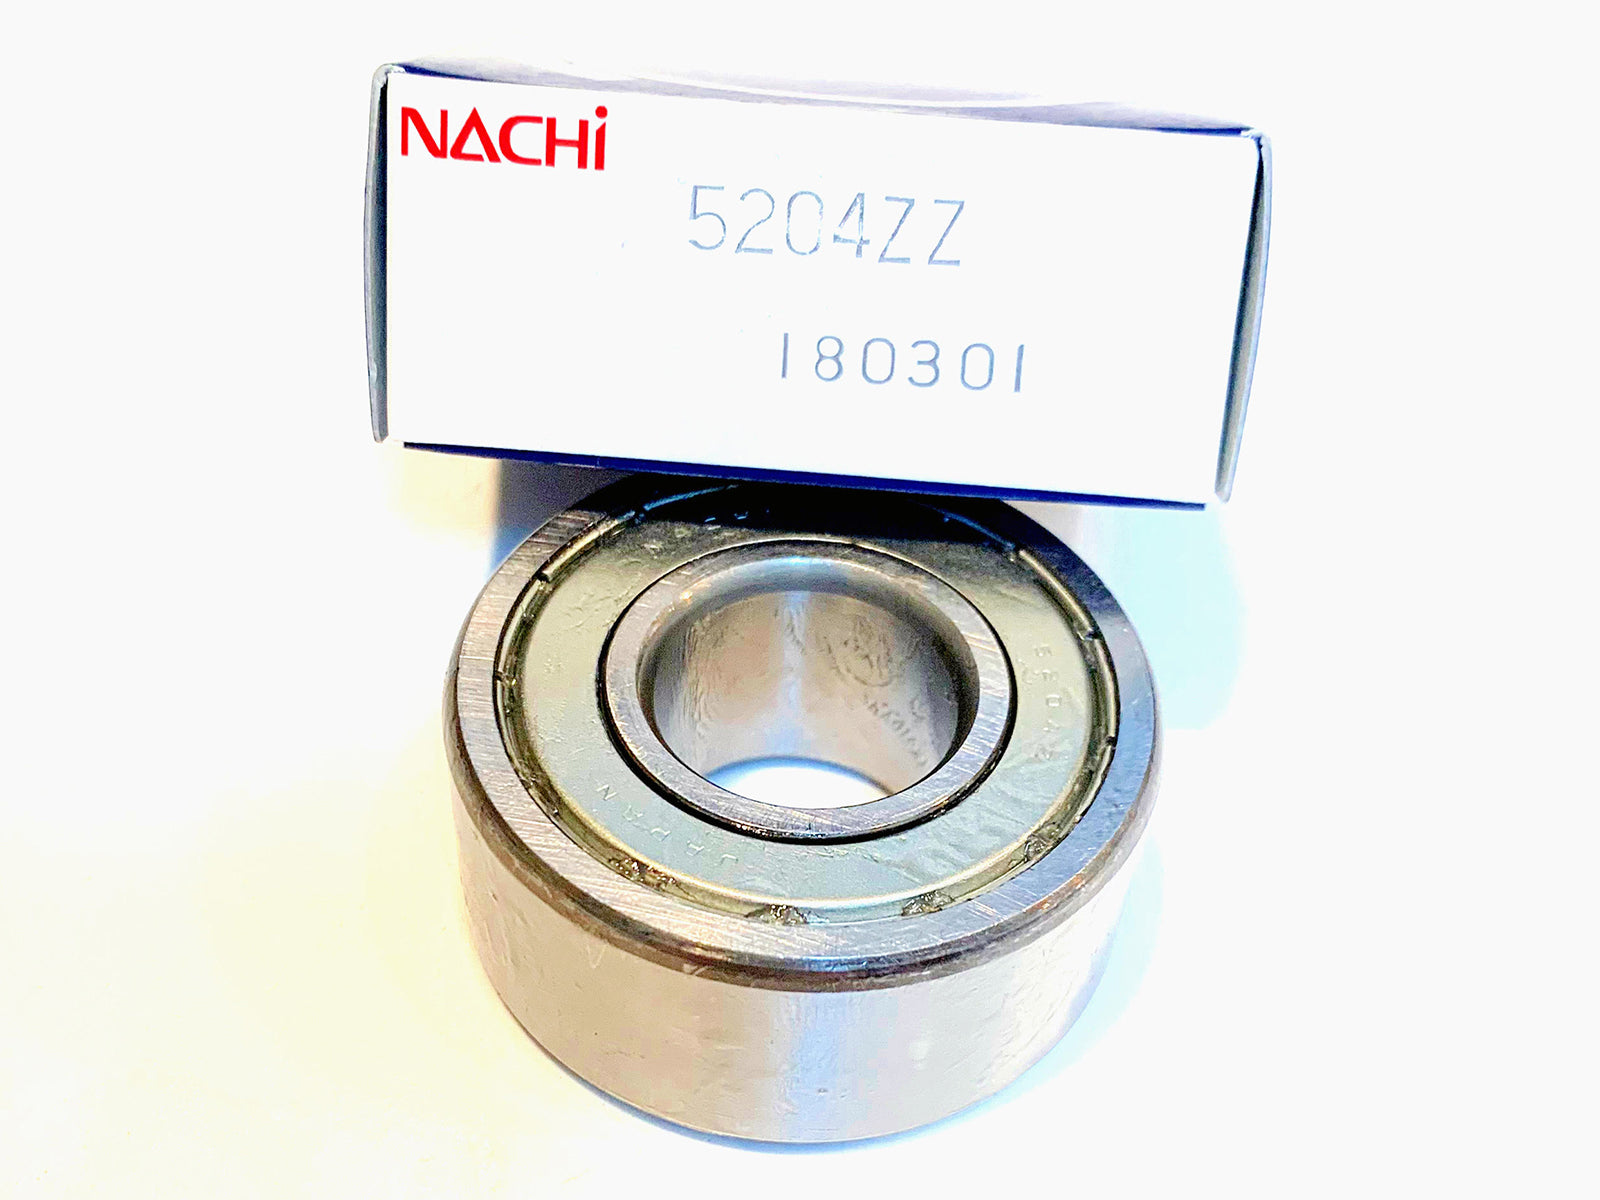 5204-ZZ Nachi Ball Bearing - ppdistributors